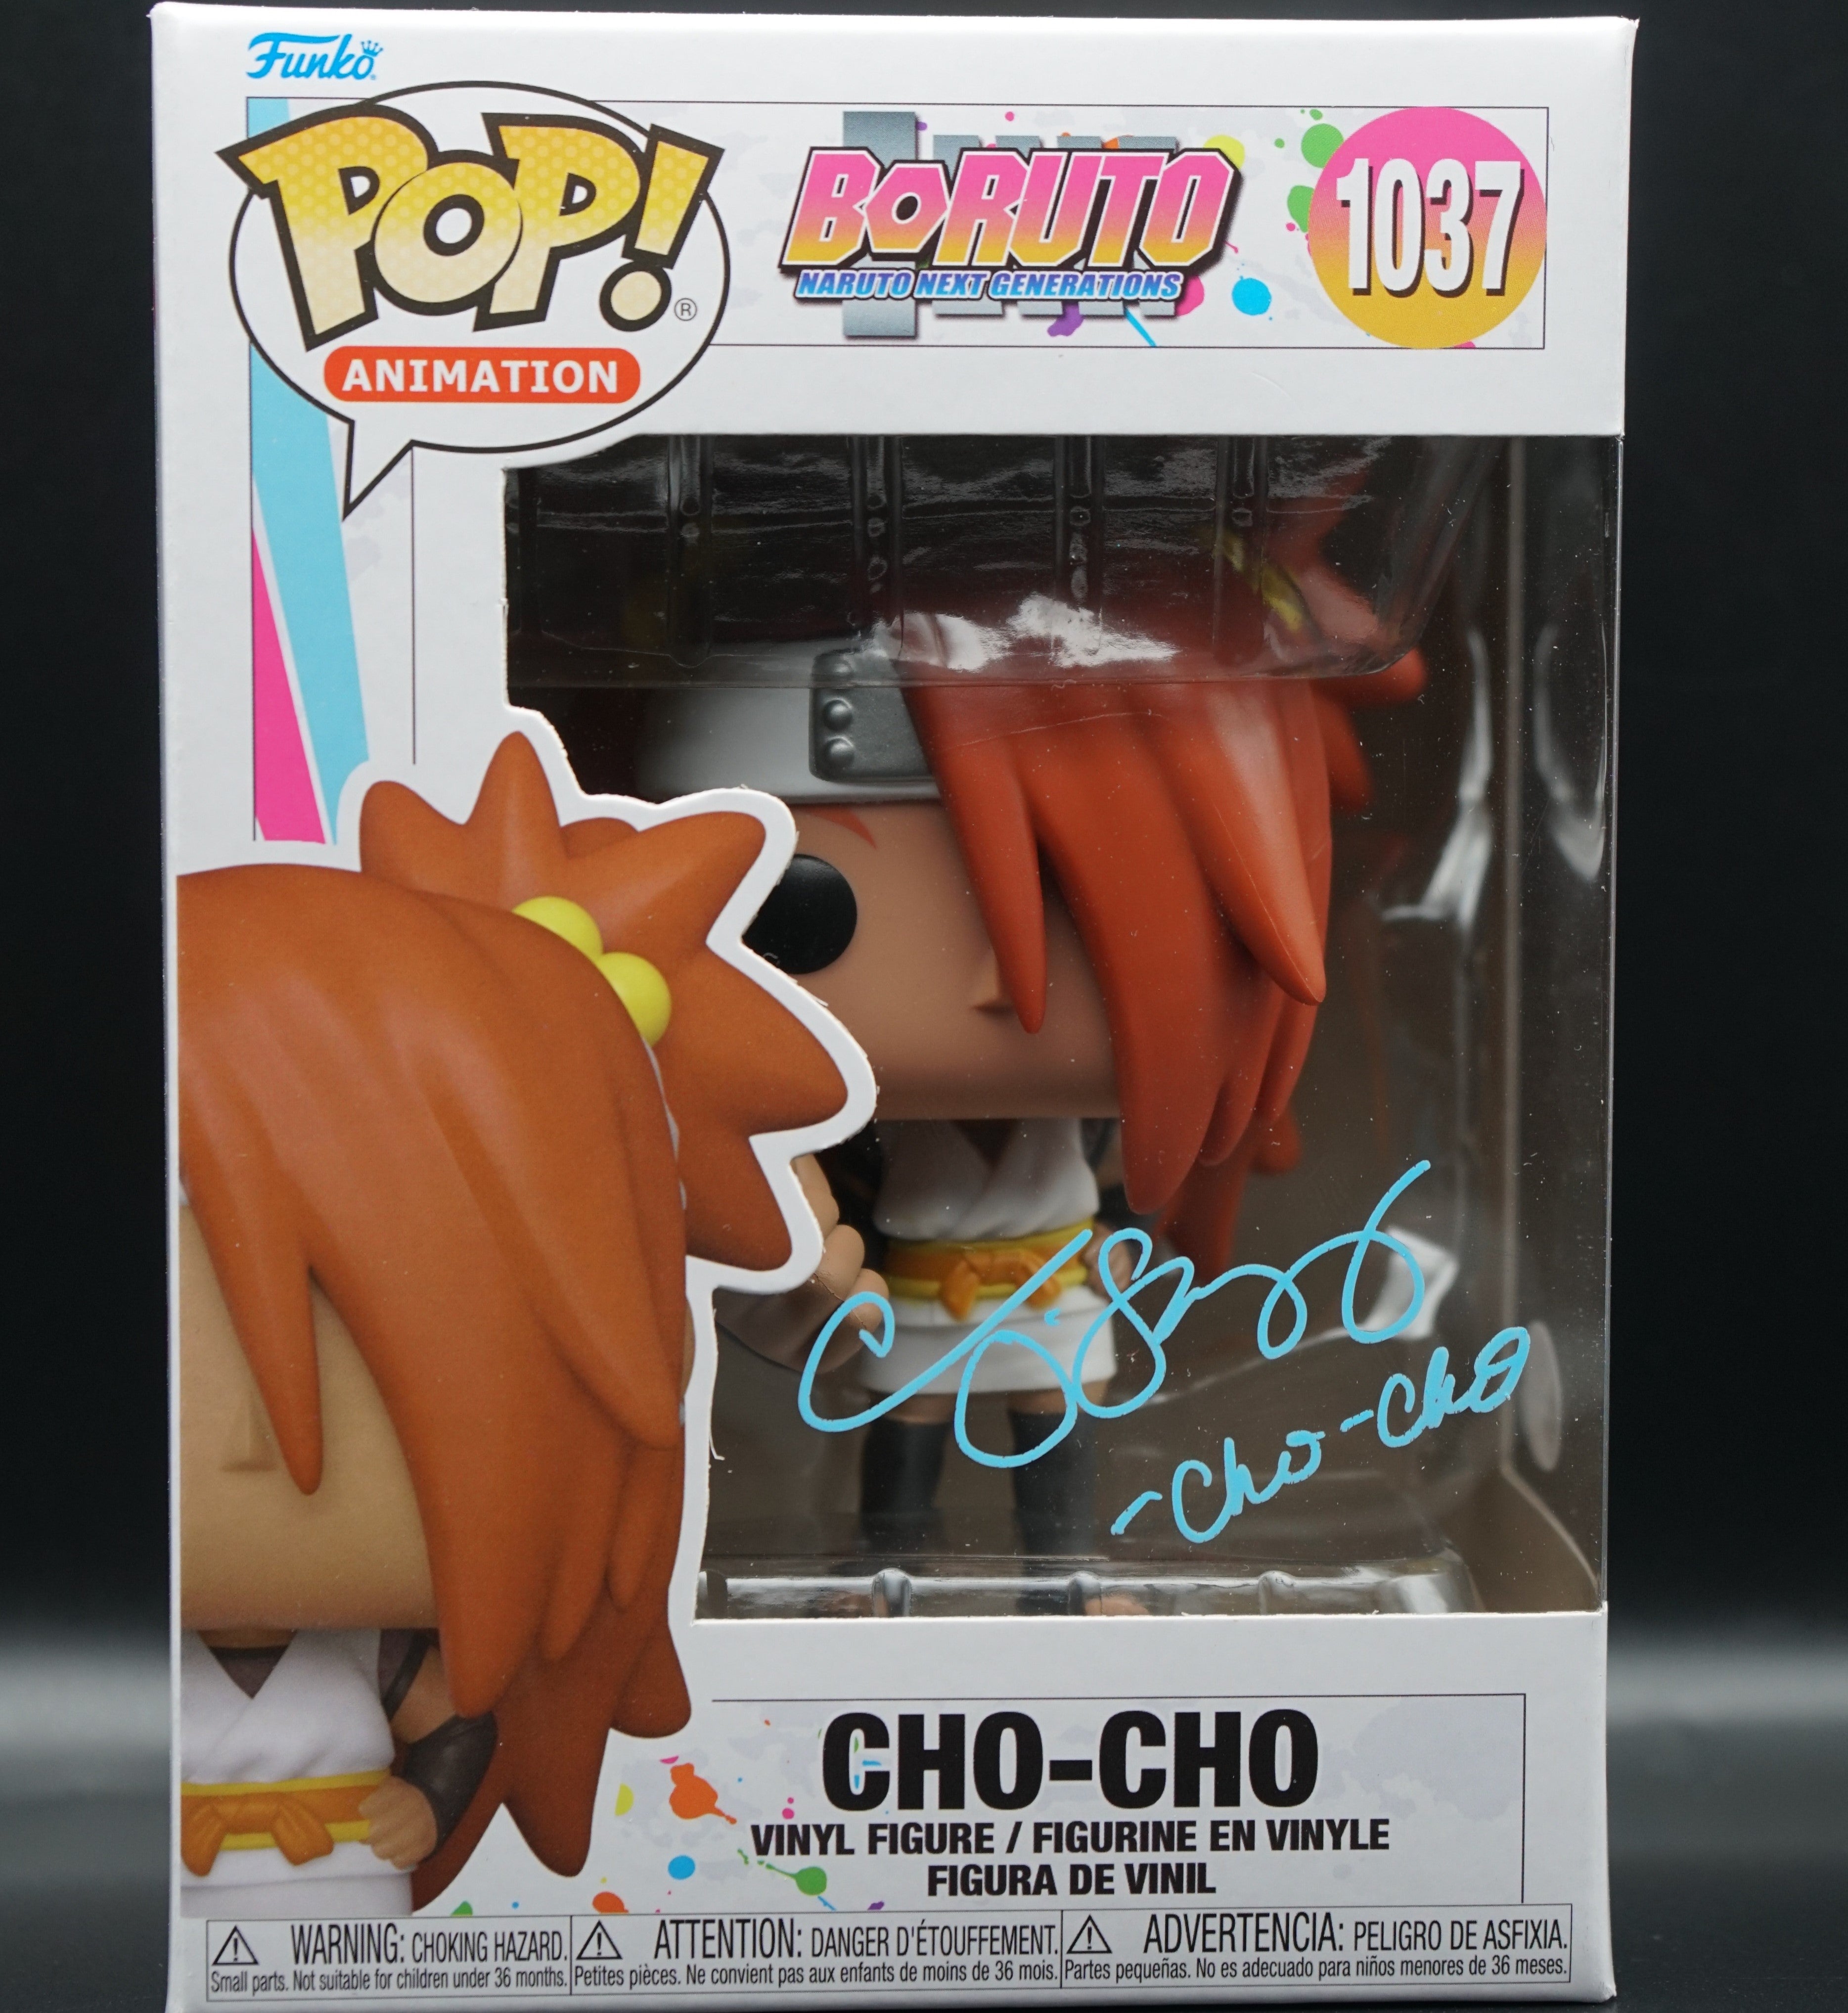 Boruto Naruto Next Generations Cho-Cho Funko Pop #1037 PSA COA - Signed By Colleen O'Shaughnessey